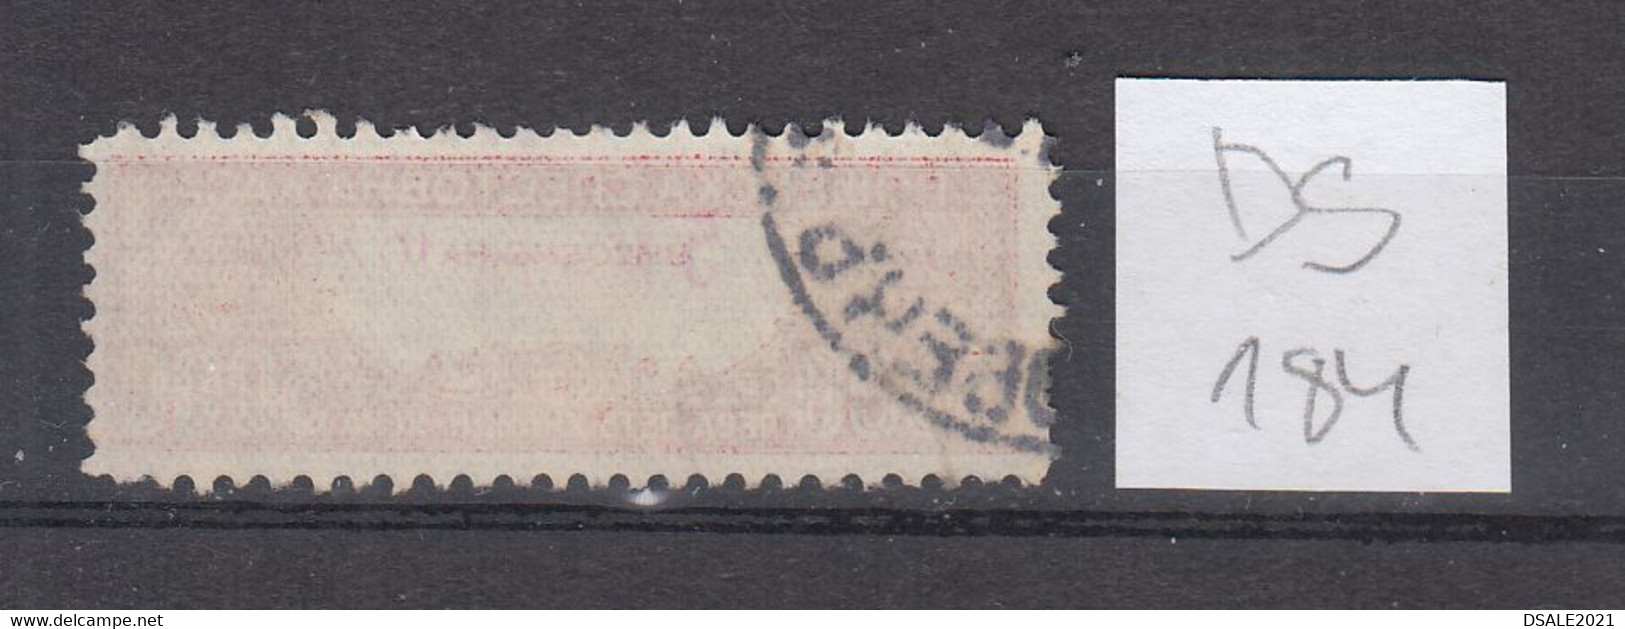 Bulgaria Bulgarie Bulgarije 1930s/40s Postal Savings Bank Contribution Fee 5000Lv. Fiscal Revenue Stamp (ds184) - Francobolli Di Servizio